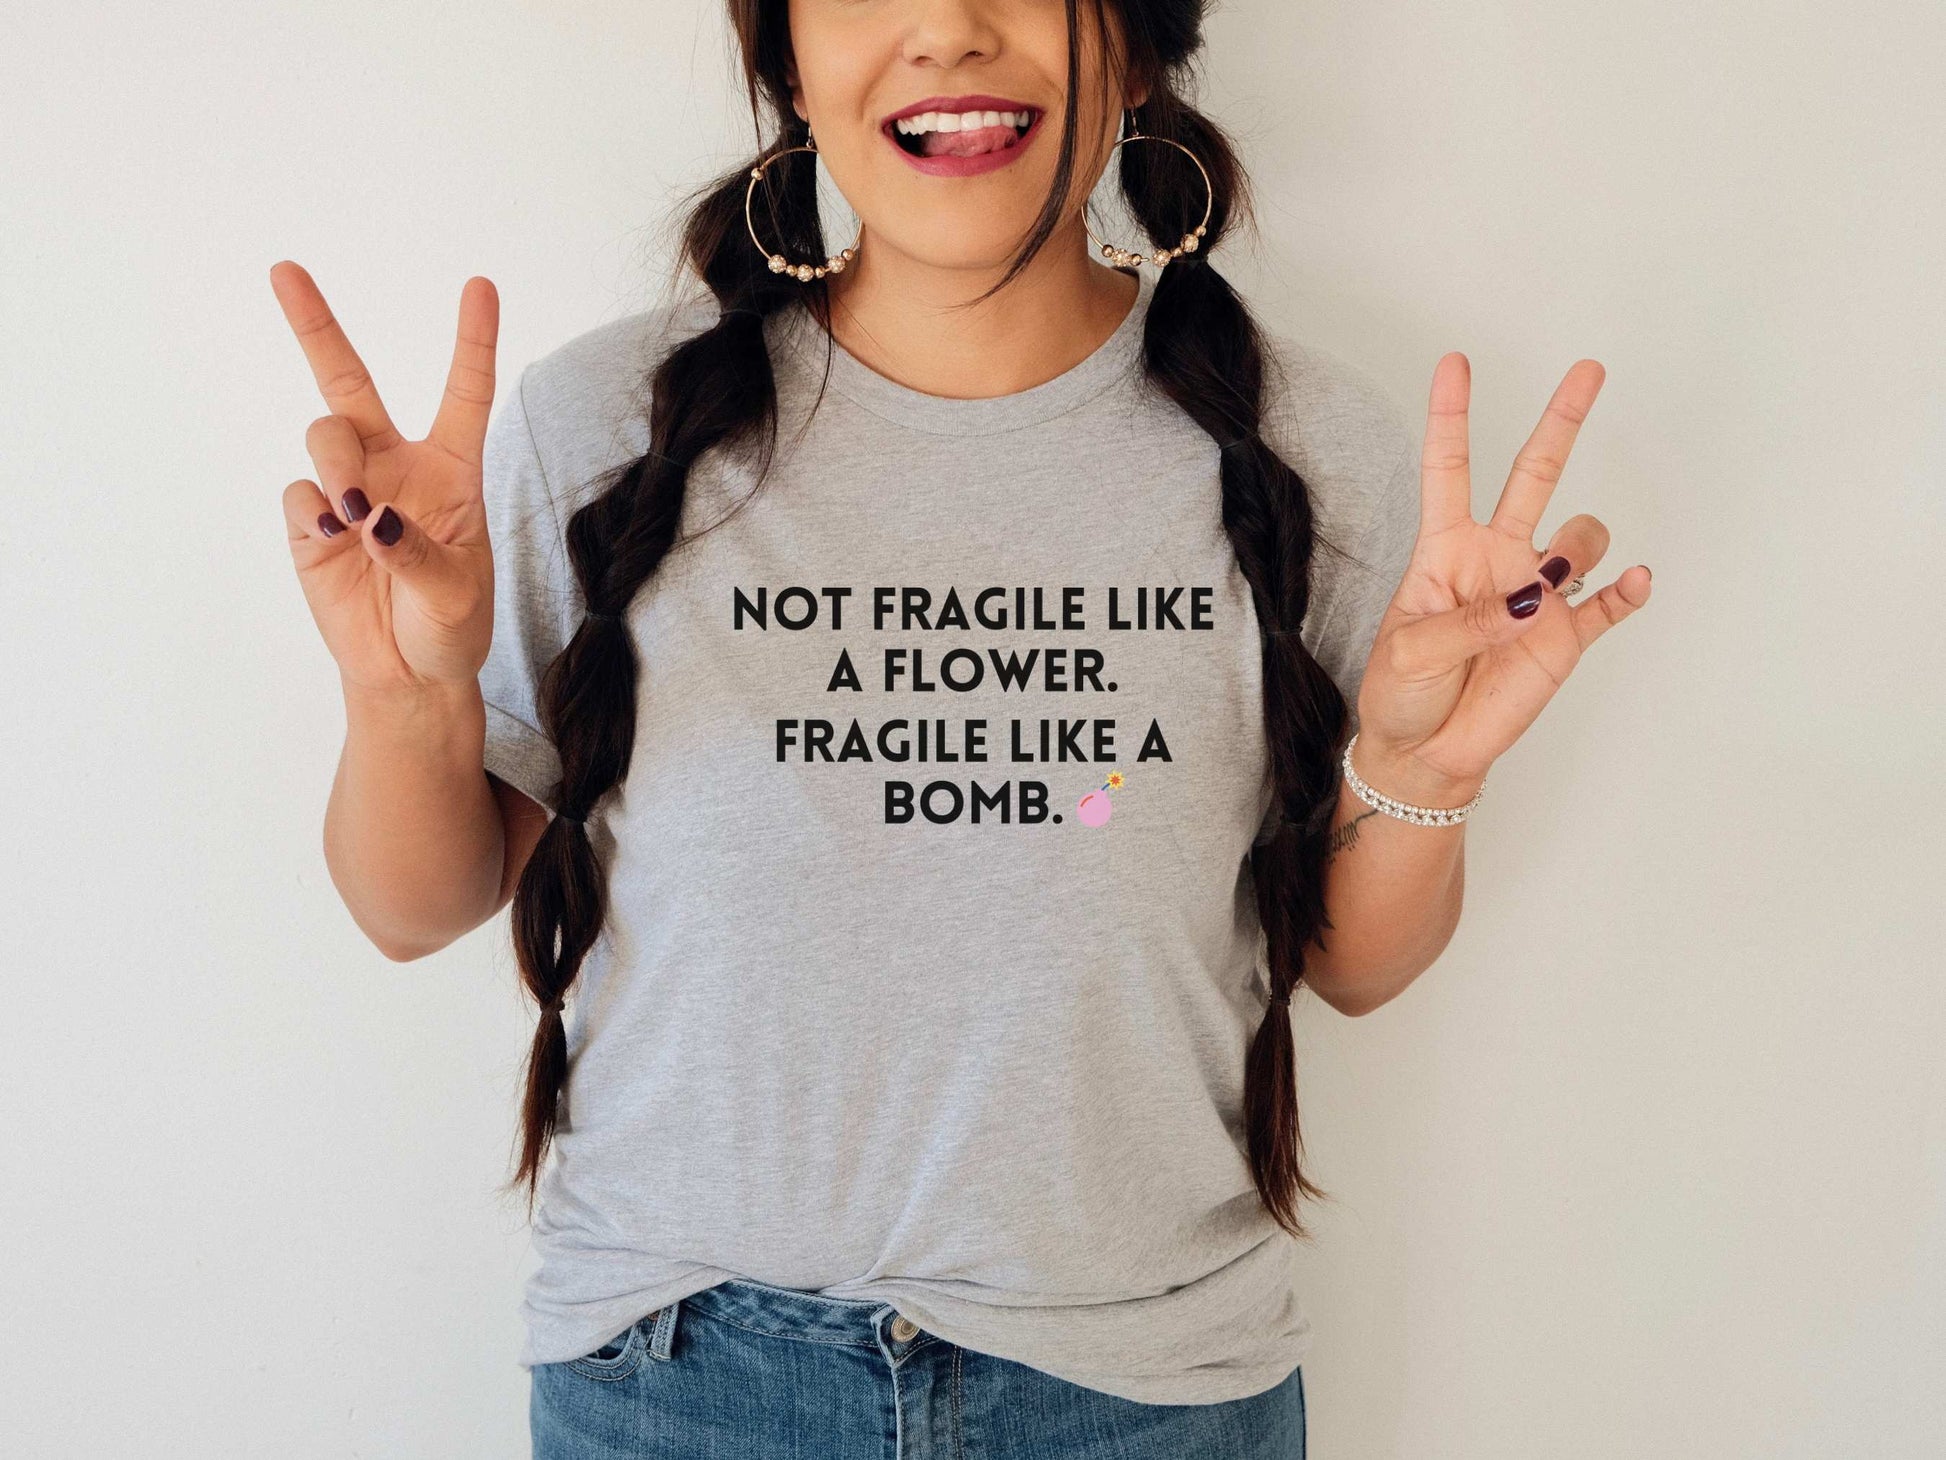 Fragile Like a Bomb Frida Kahlo T-Shirt in Athletic Heather